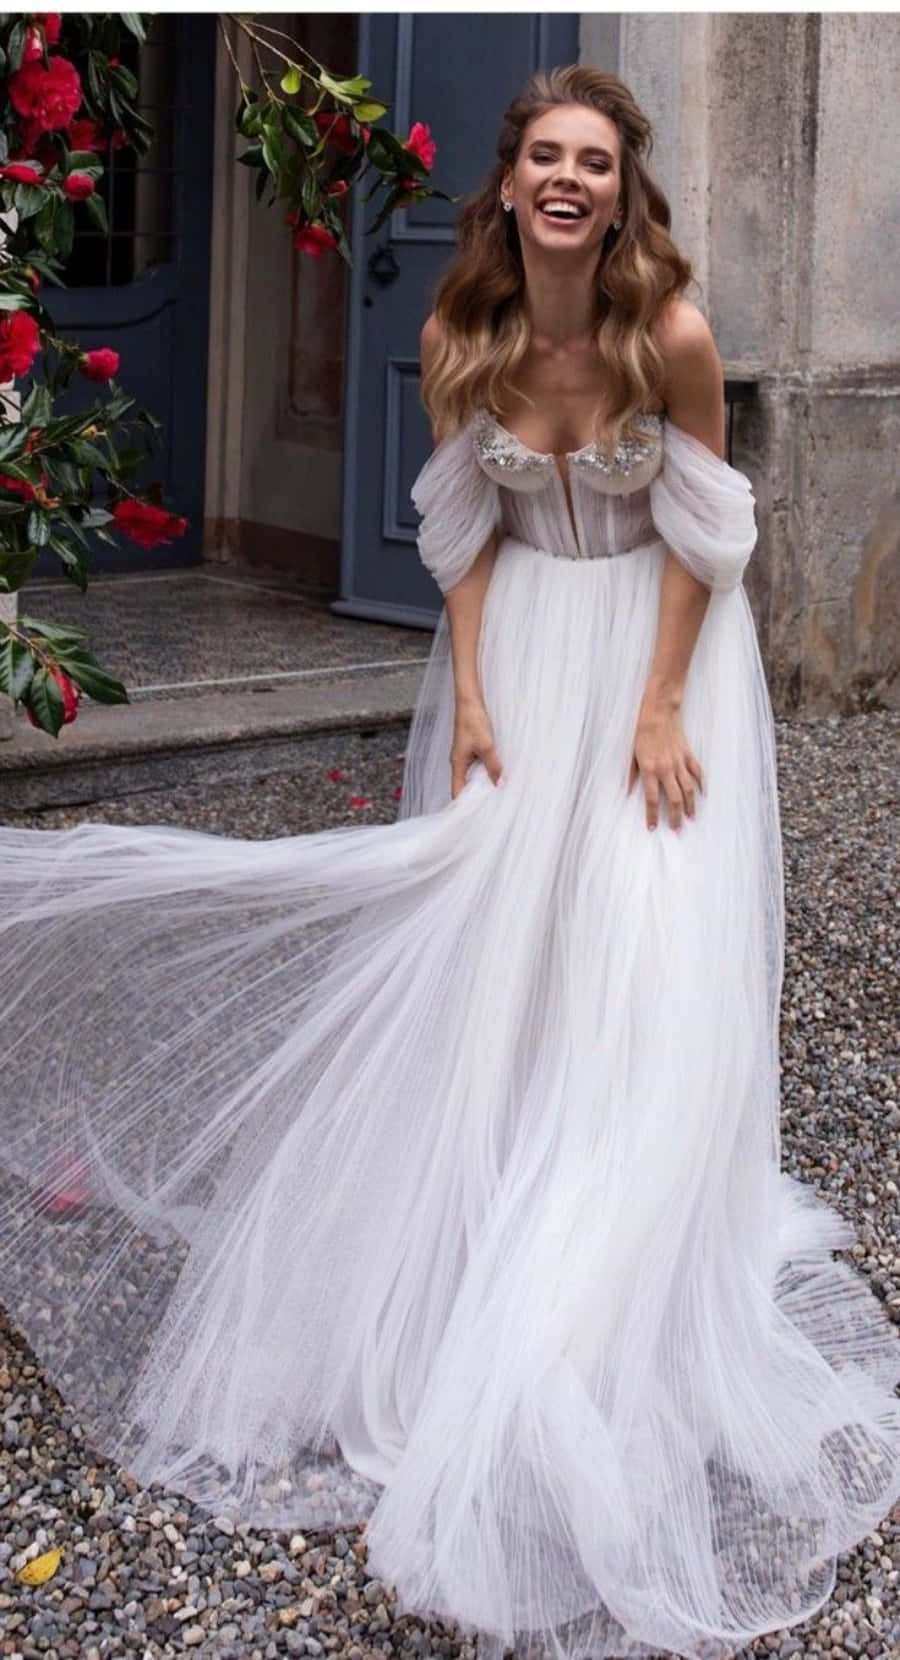 Elegant Bride Wearing a Beautiful Wedding Dress in an Outdoor Venue